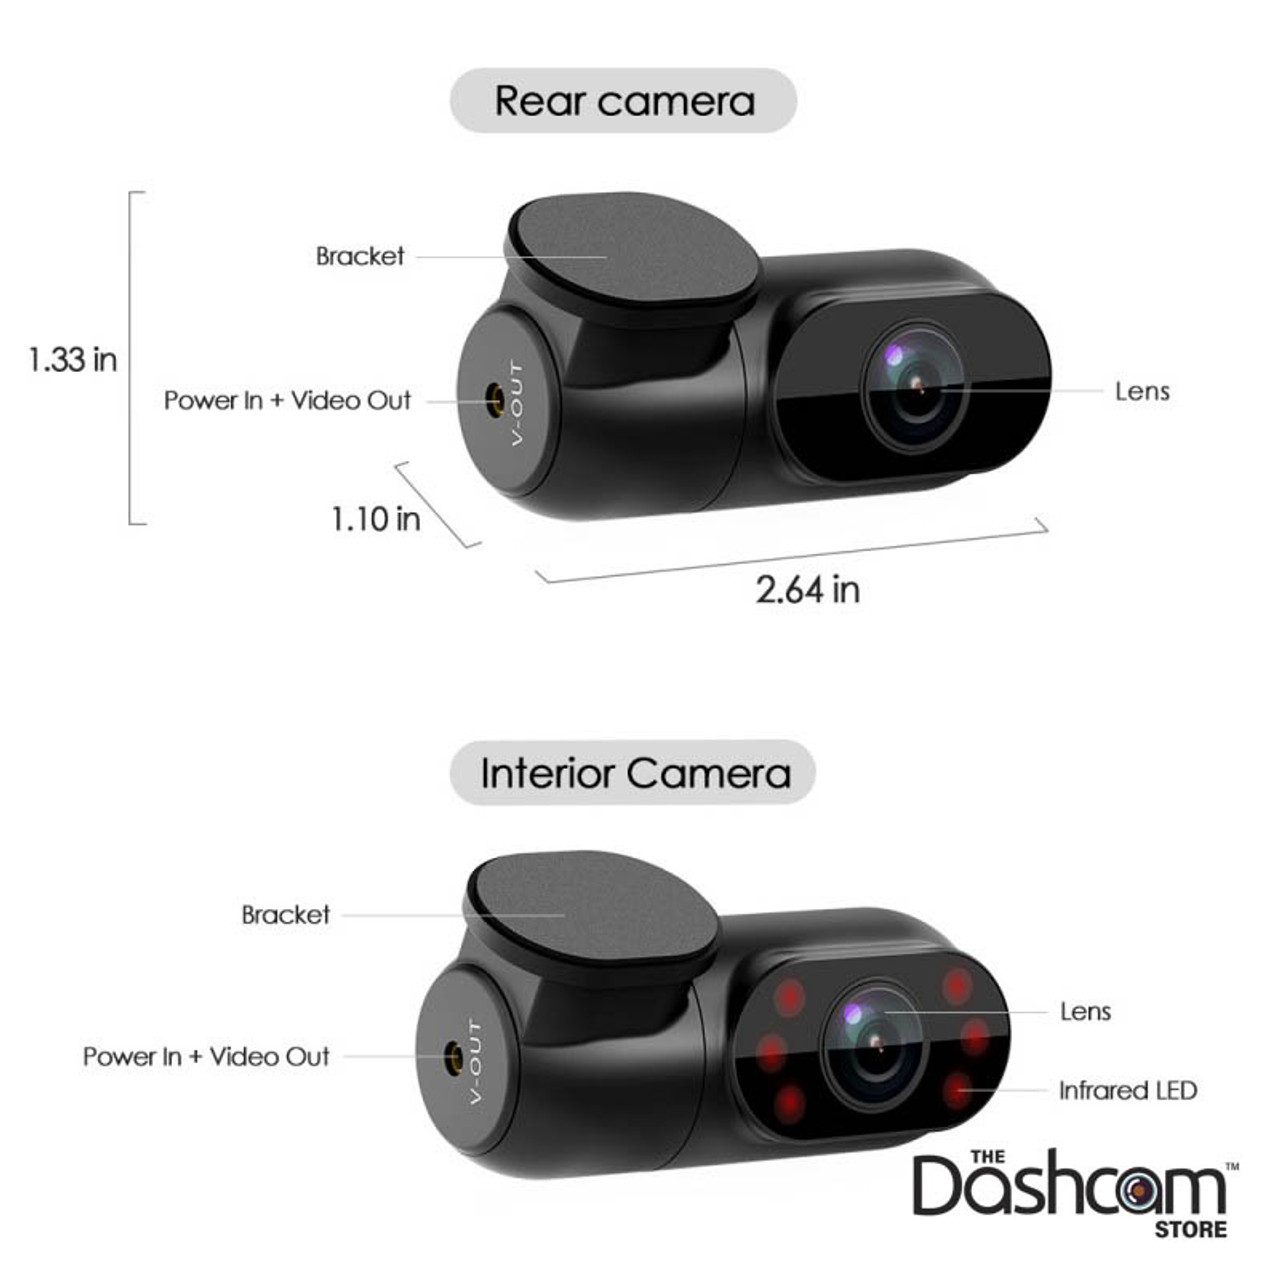 Shop VIOFO A139-PRO-3CH 4K Dash Cam DIY Installation Bundle